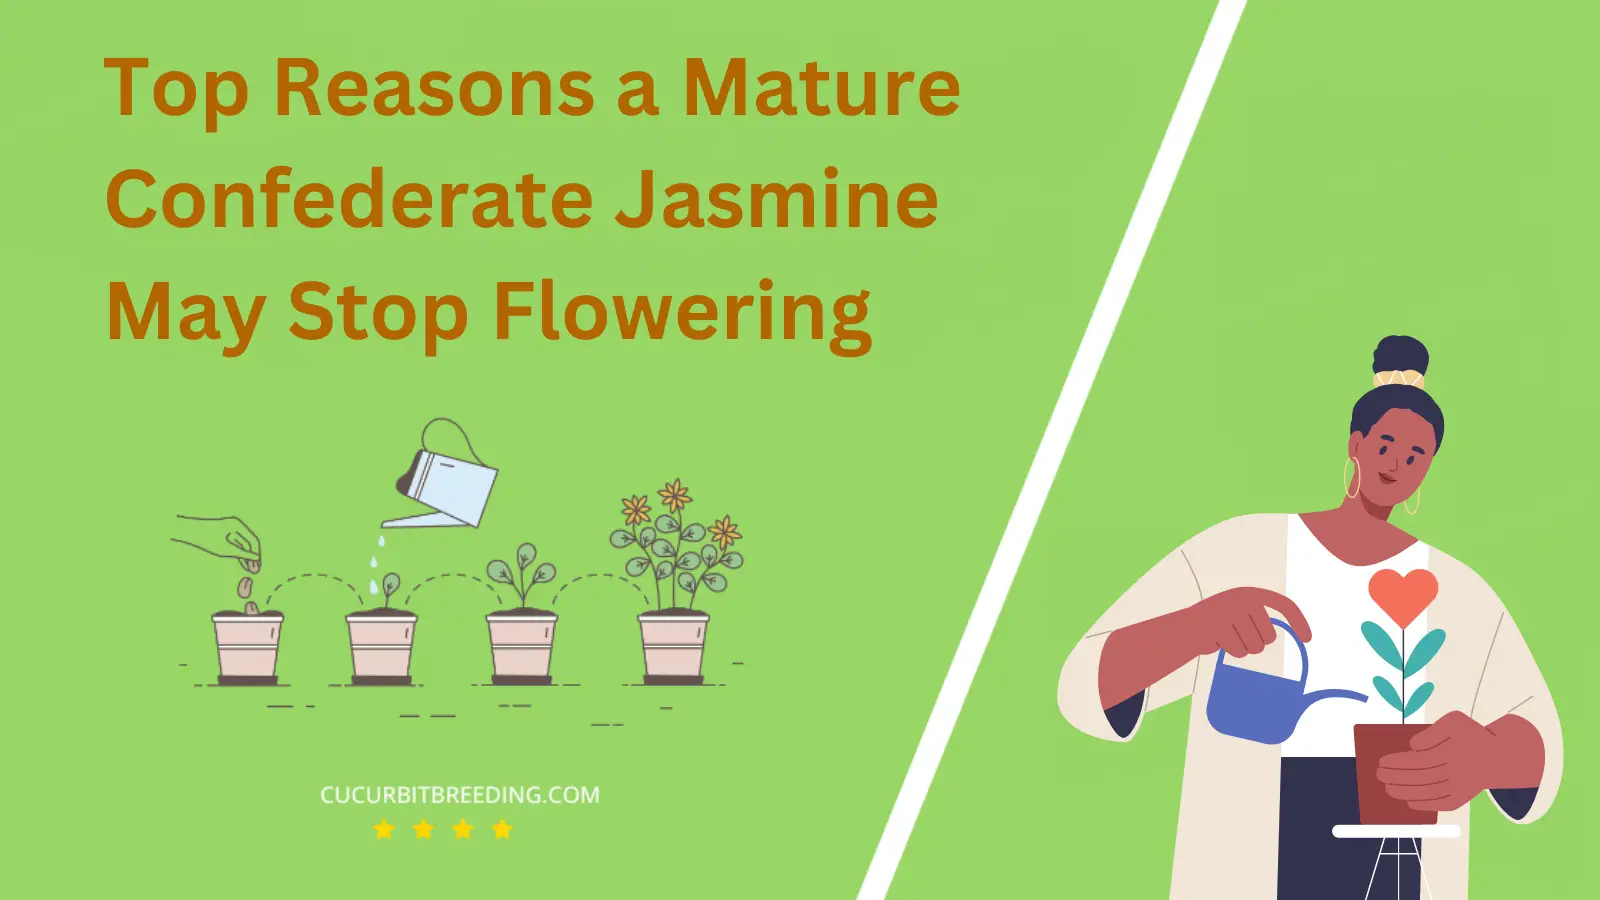 Top Reasons a Mature Confederate Jasmine May Stop Flowering